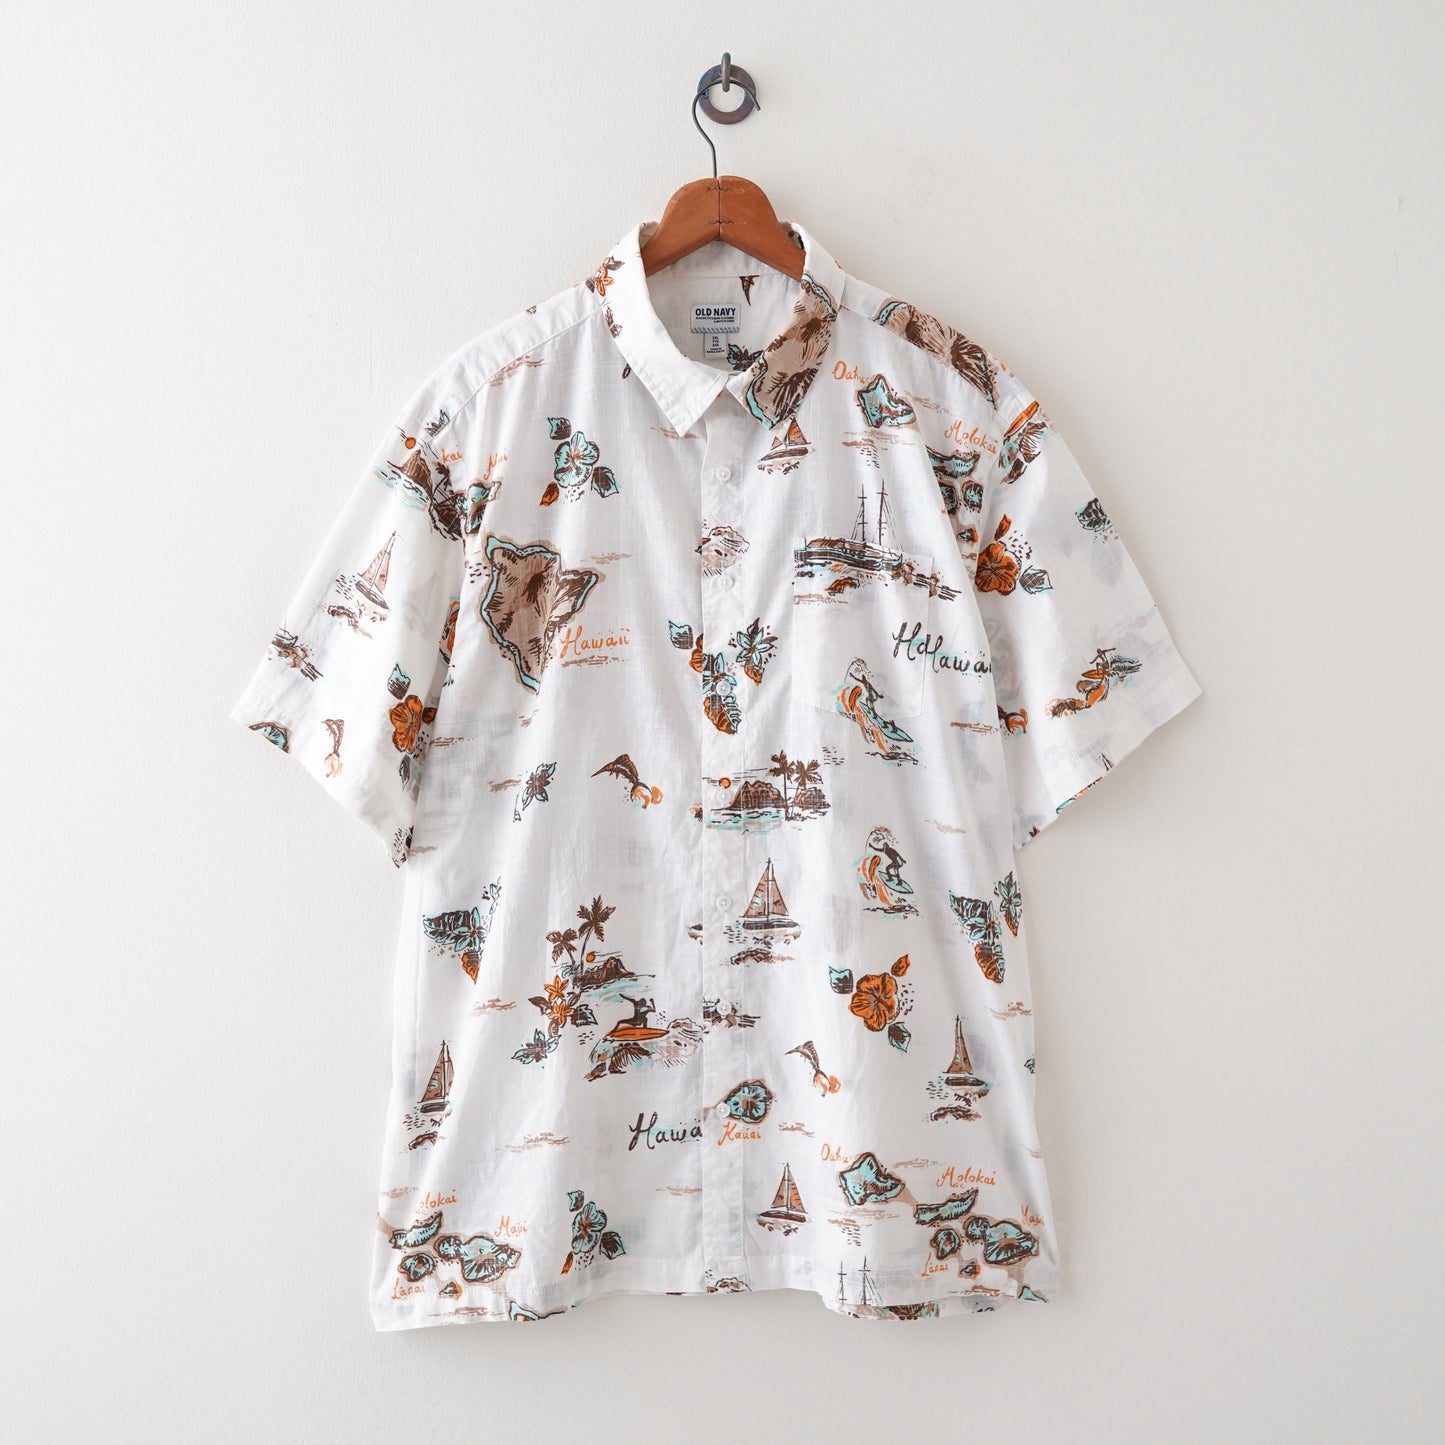 Hawaii pattern shirt